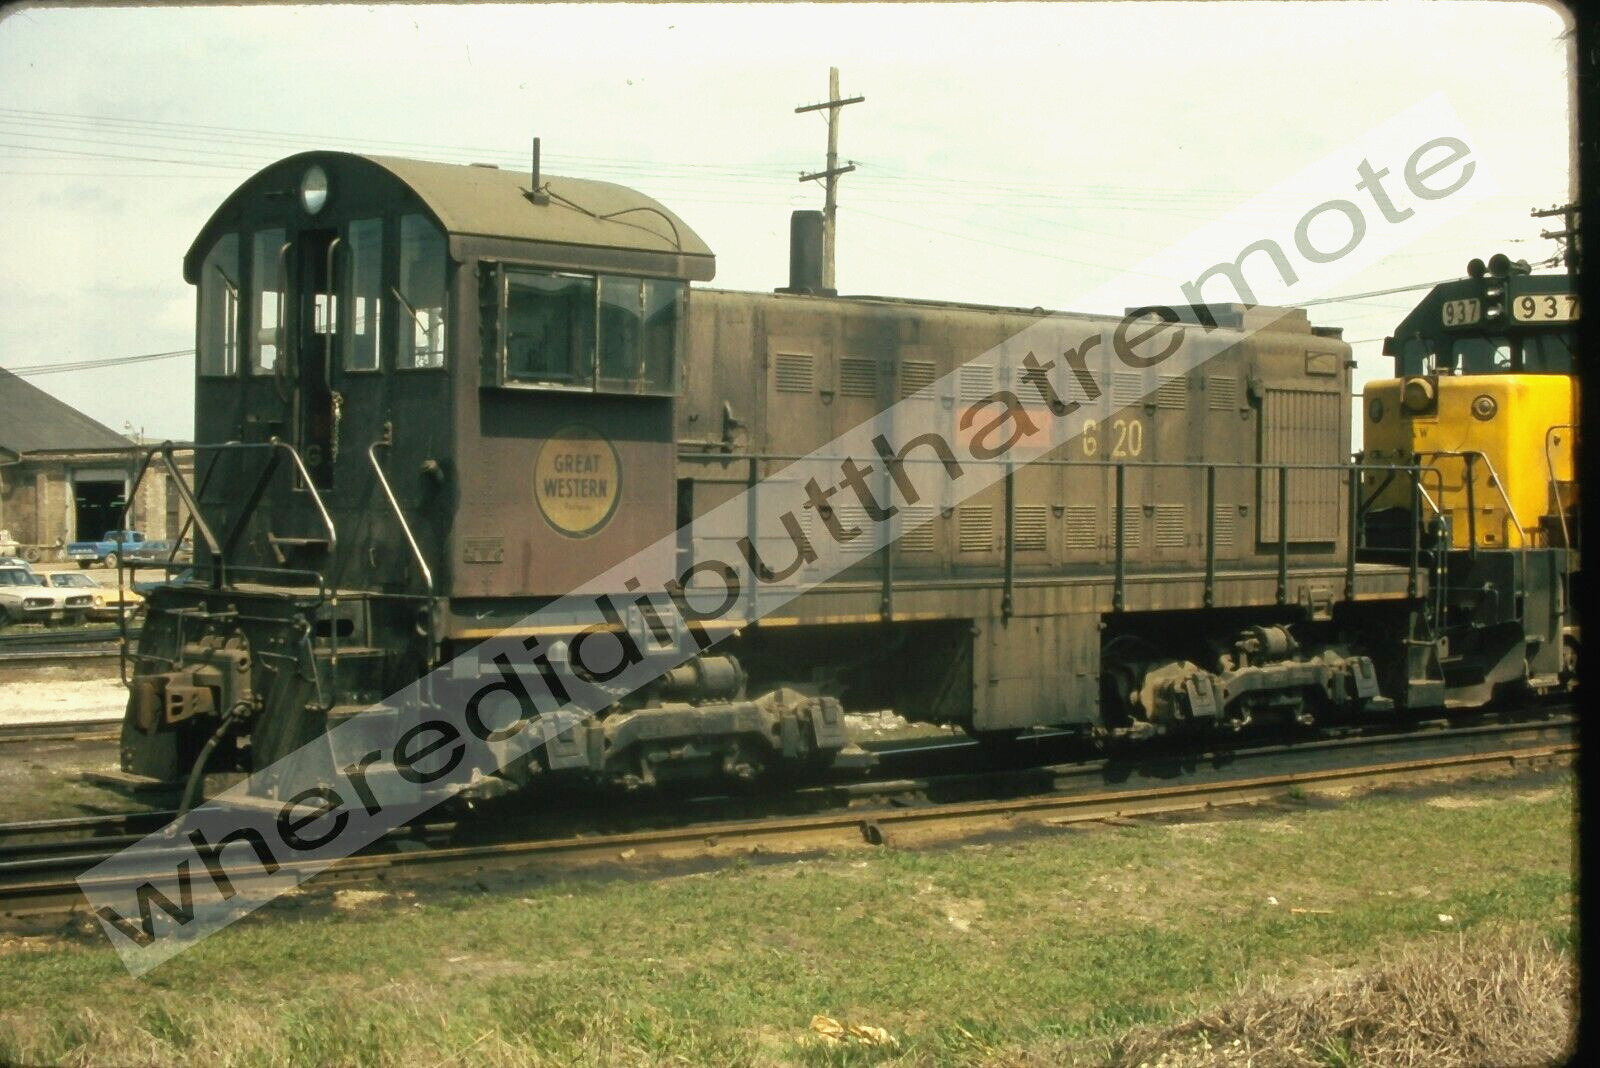 Original Slide Chicago Great Western CGW 620 ALCO S1 4-20-73  Proviso ILL